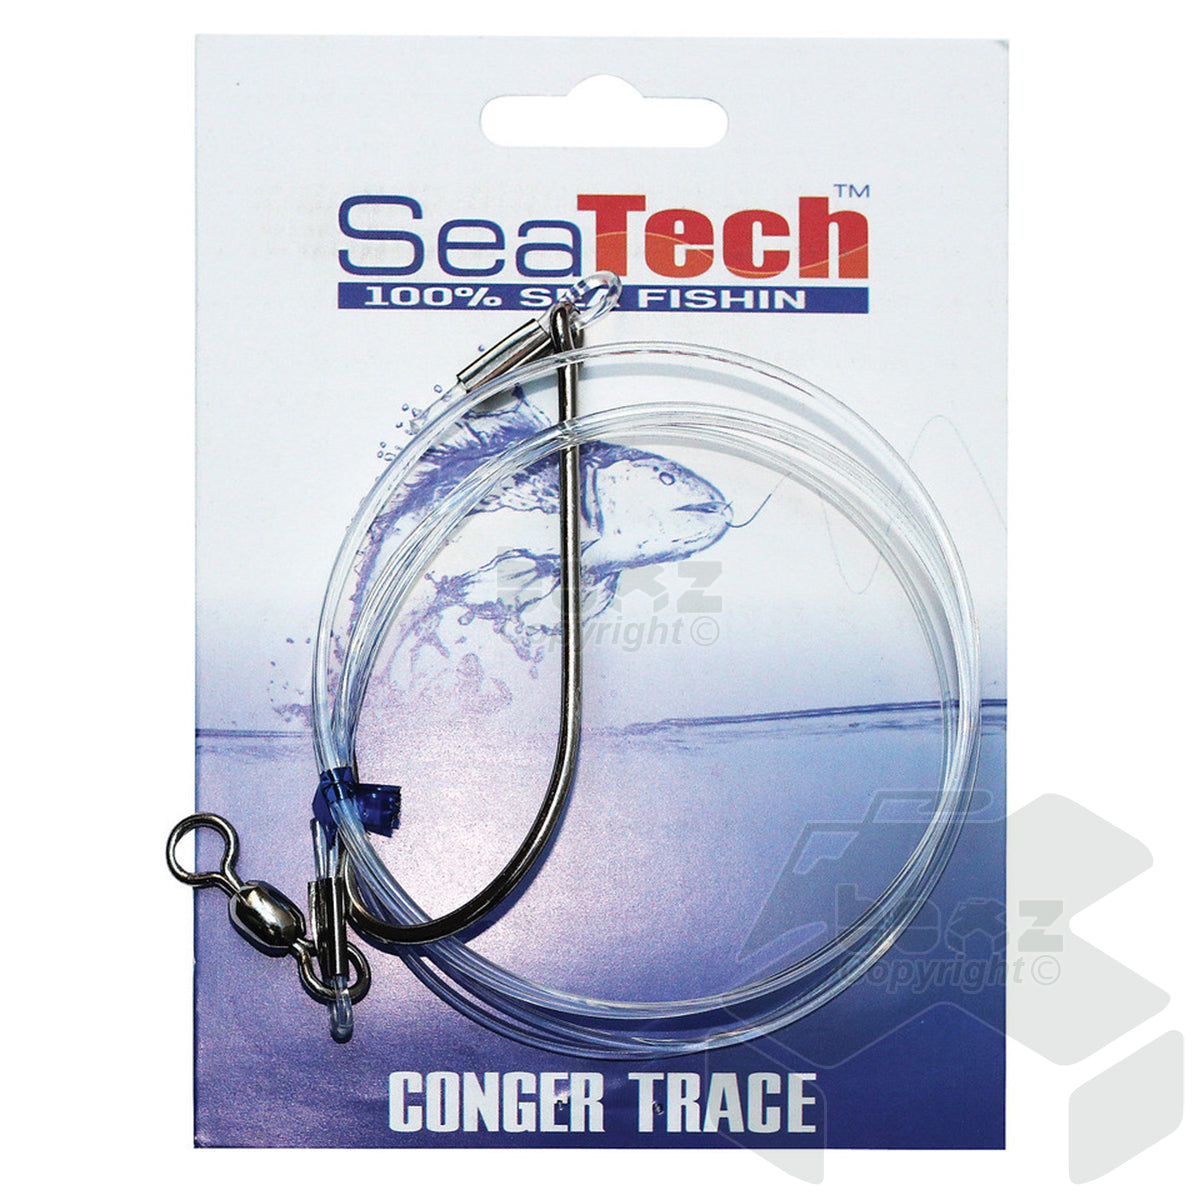 Seatech Conger Trace